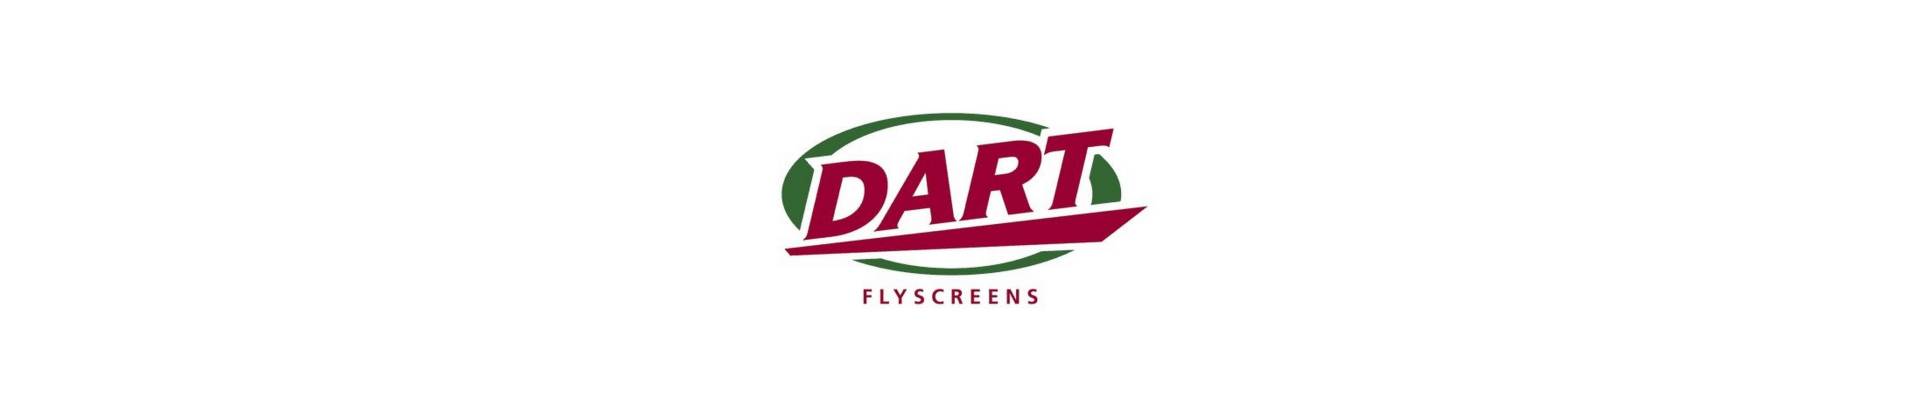 Dart Flyscreens